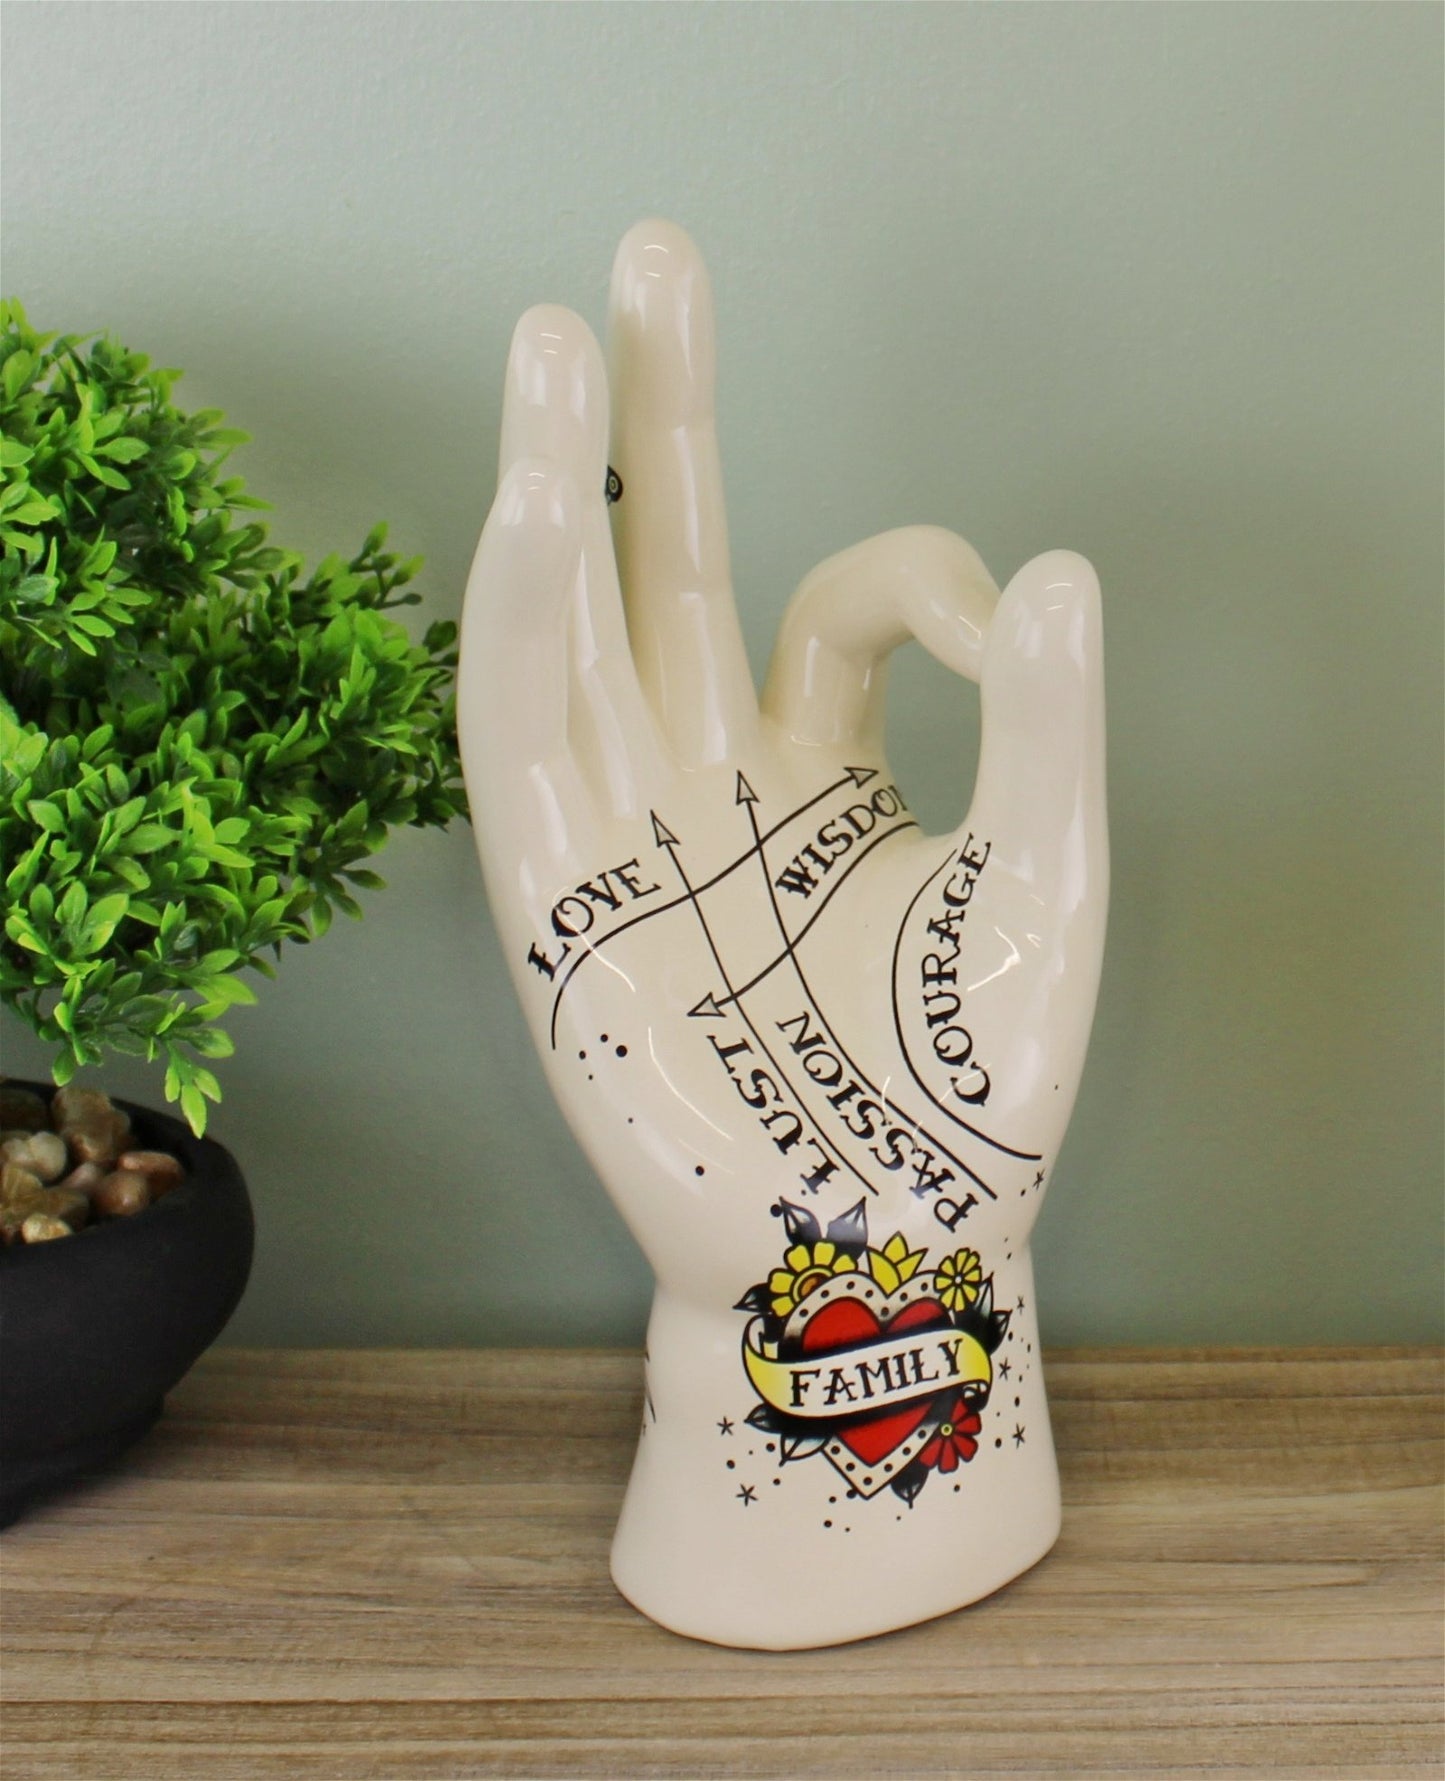 Palmistry Hand, Family, 22.5cm